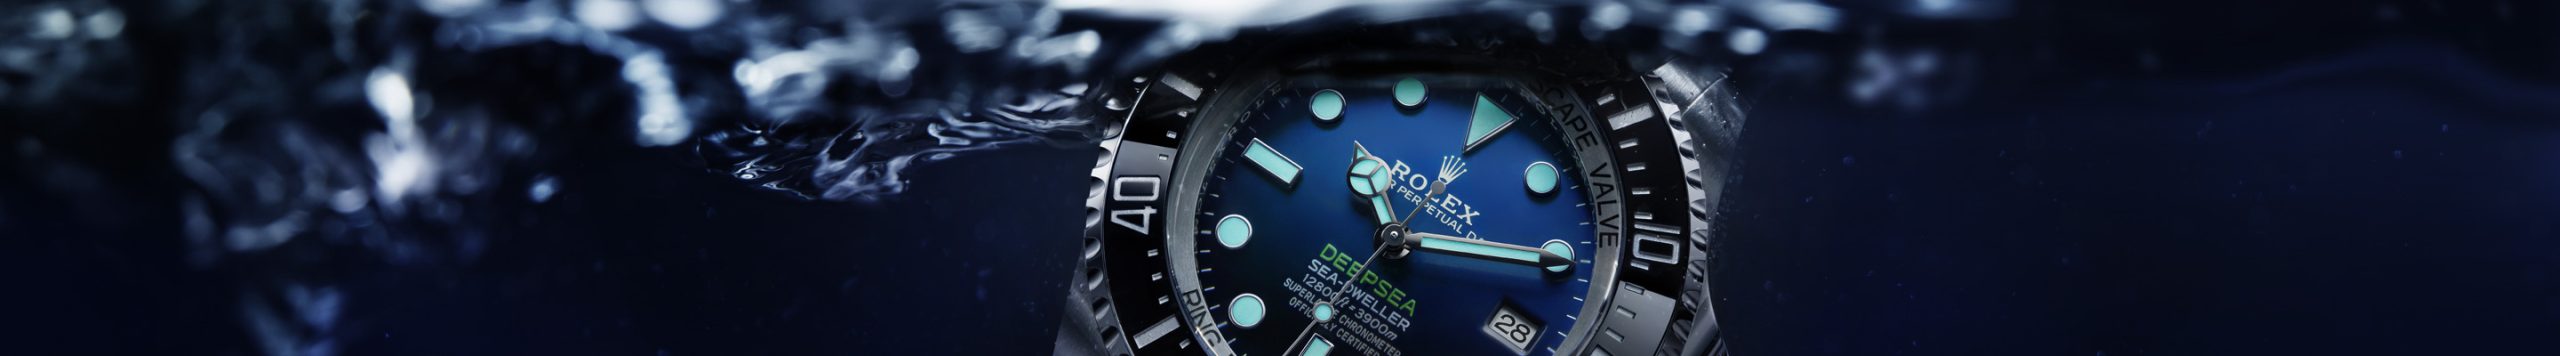 Rolex Deepsea | Rolex Official Retailer - The Time Place Singapore